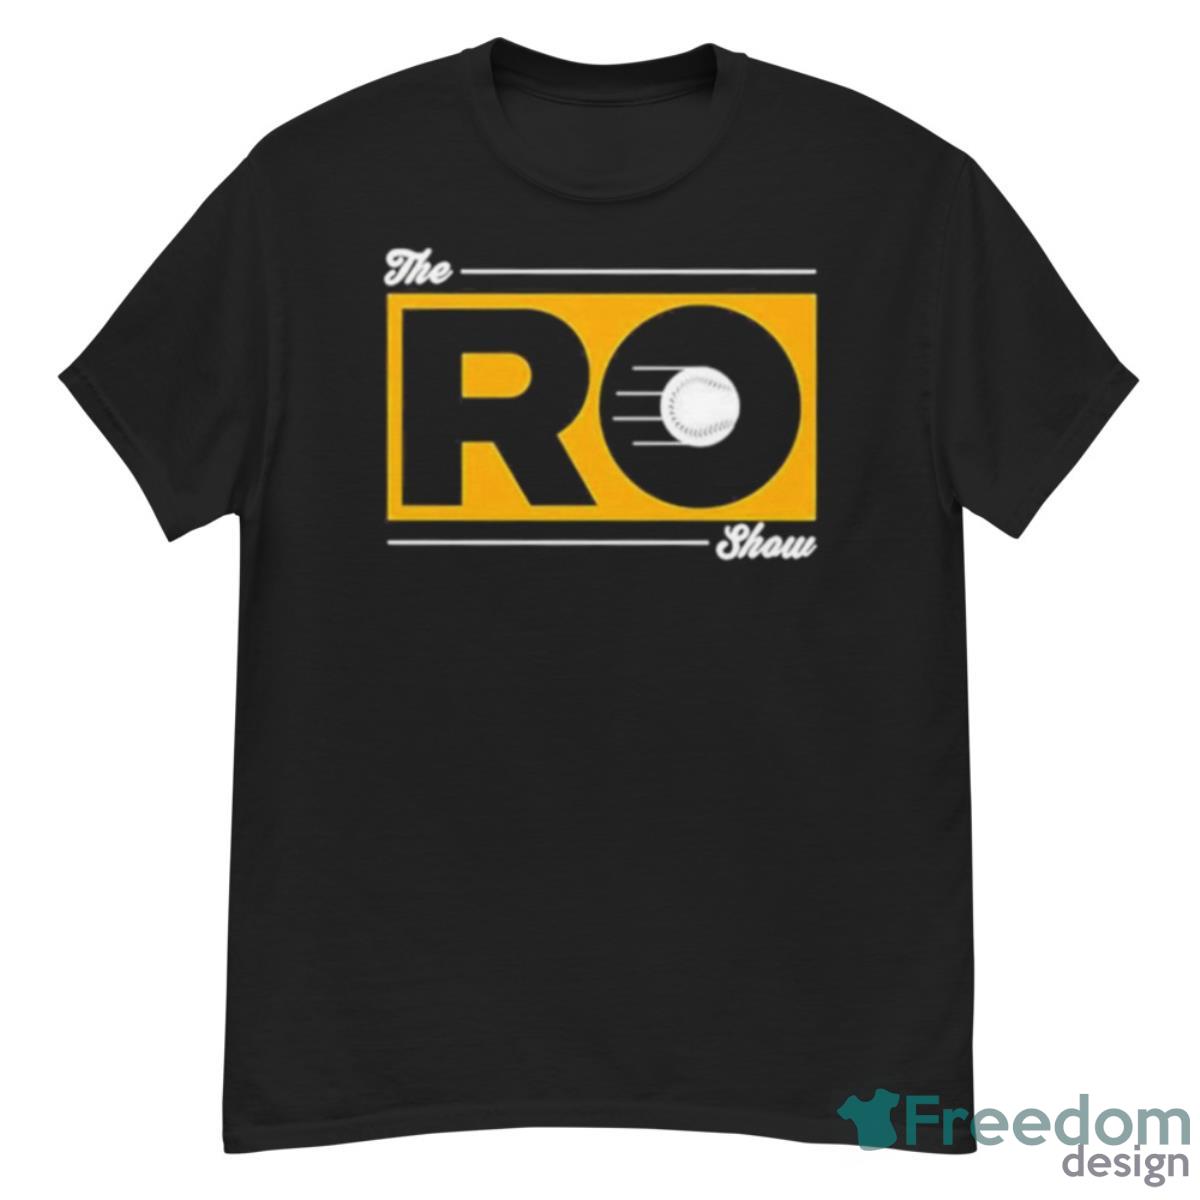 Pittsburgh Pirates The Rod Show 2023 Shirt - Freedomdesign